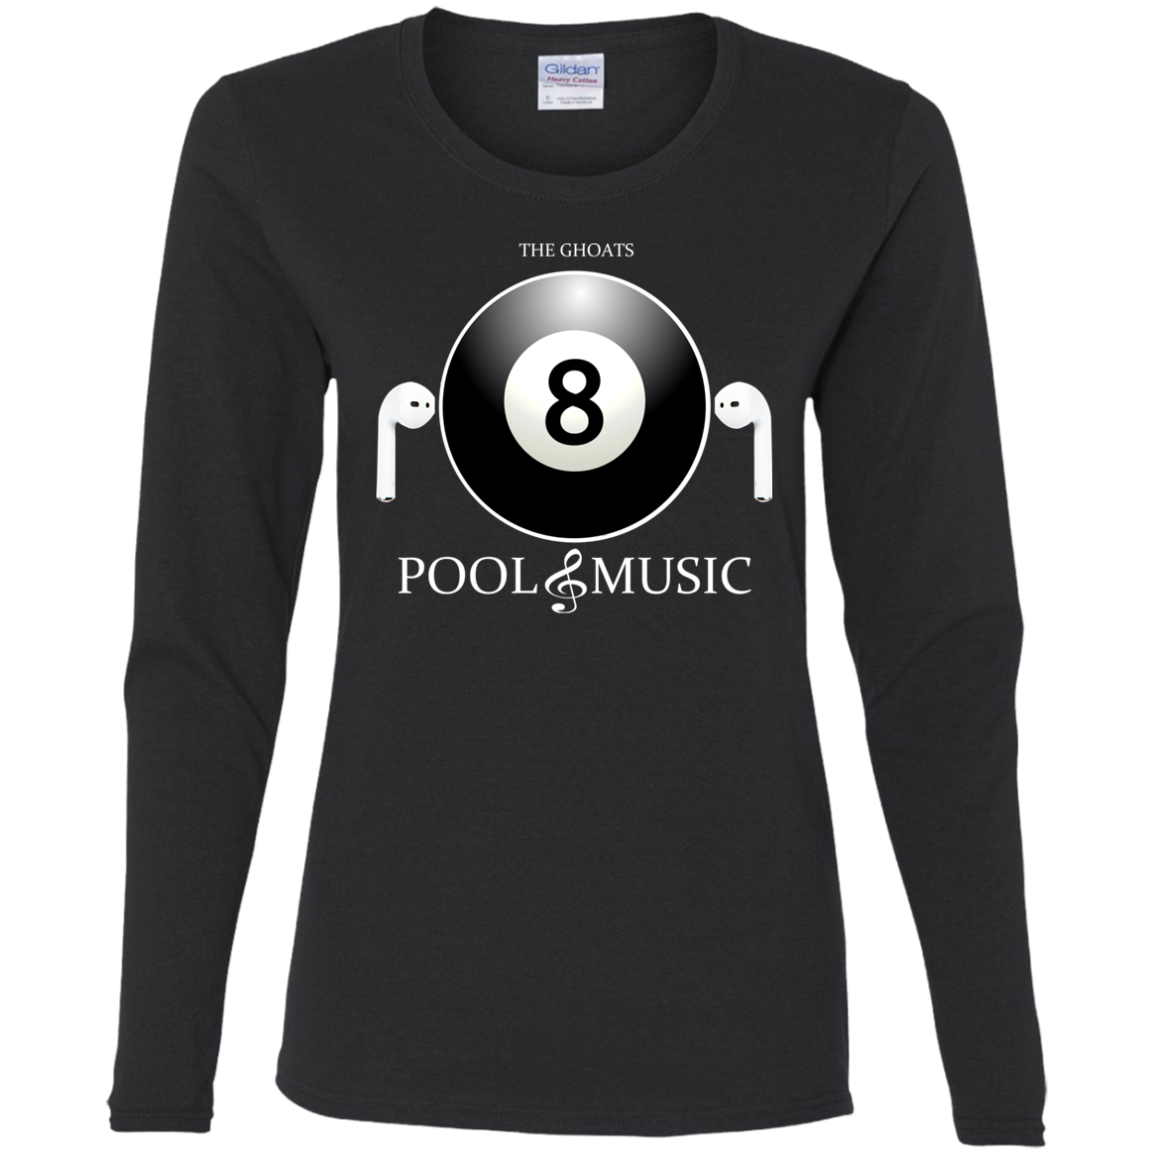 The GHOATS Custom Design. #19 Pool & Music. Ladies' Cotton LS T-Shirt